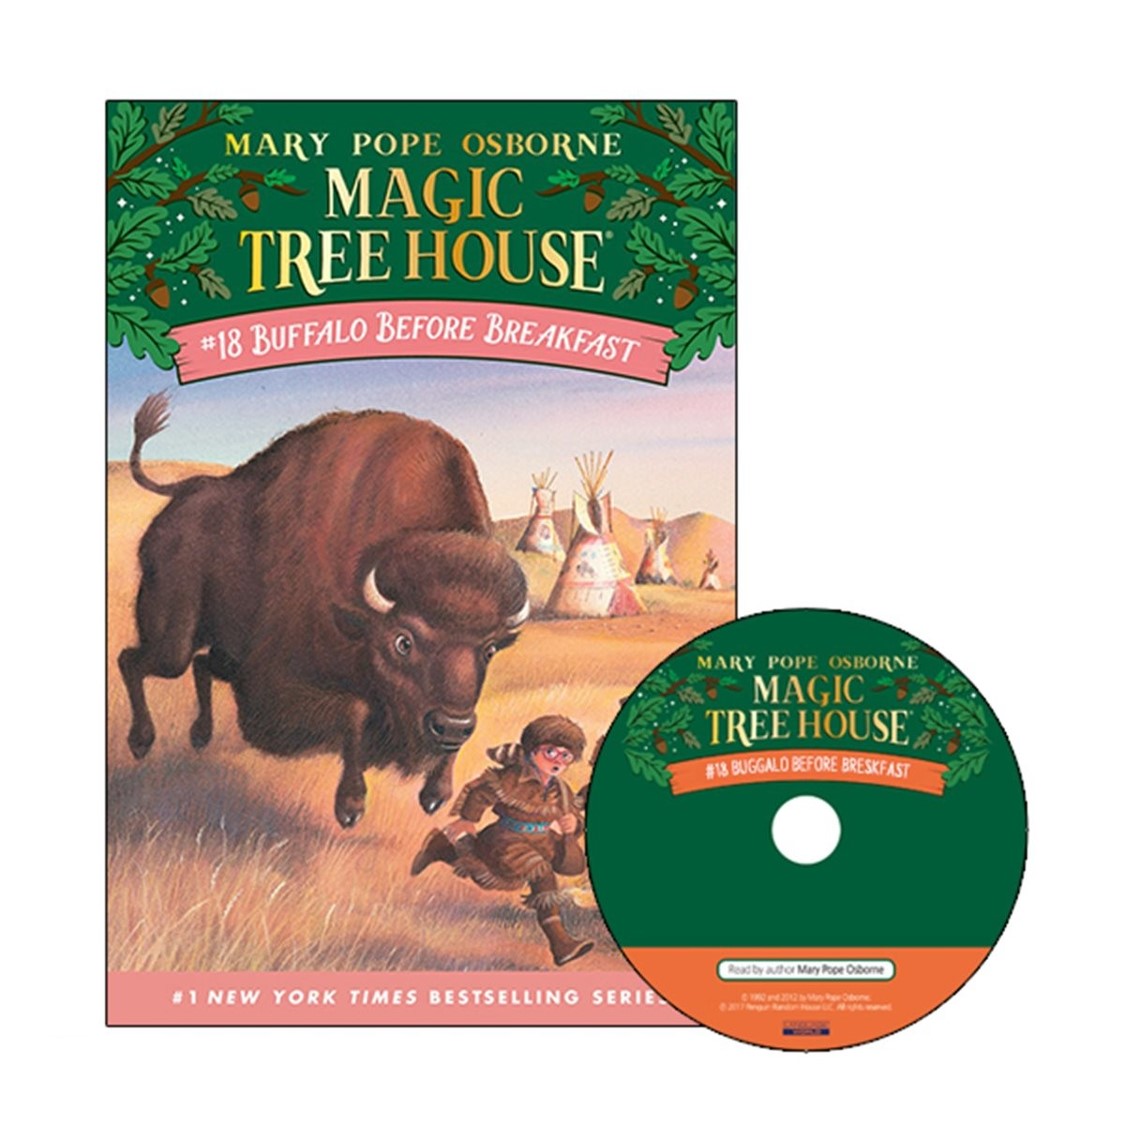 Magic Tree House #18 Buffalo Before Breakfast (Paperback+Audio CD)